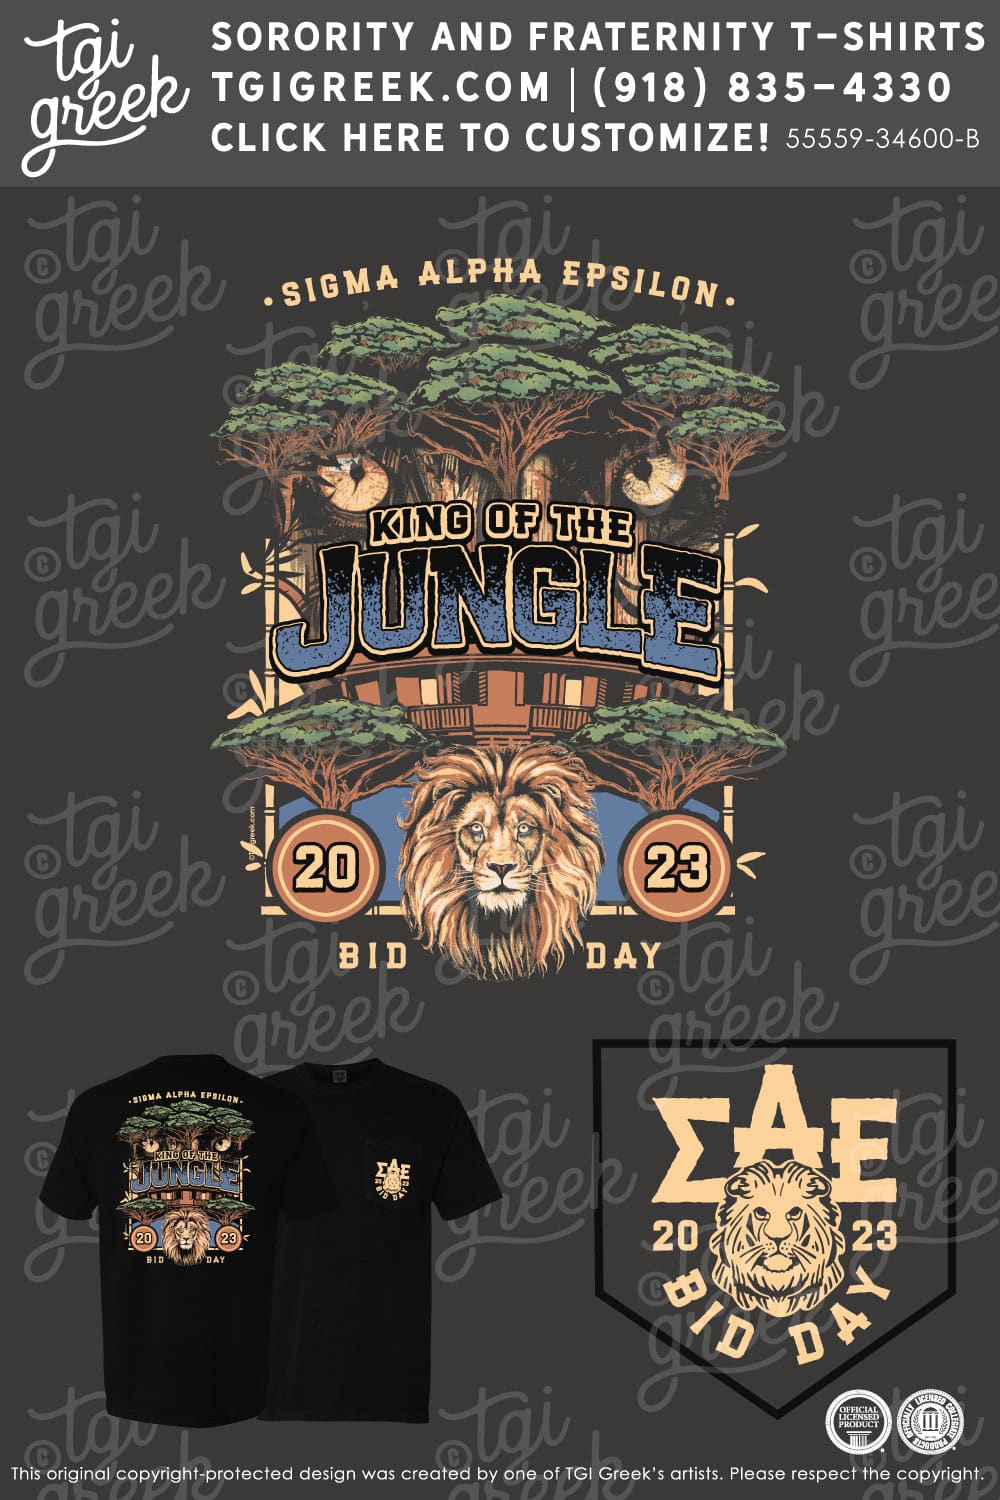 Sigma Alpha Epsilon - TXSU Jungle Bid Day - TGI Greek